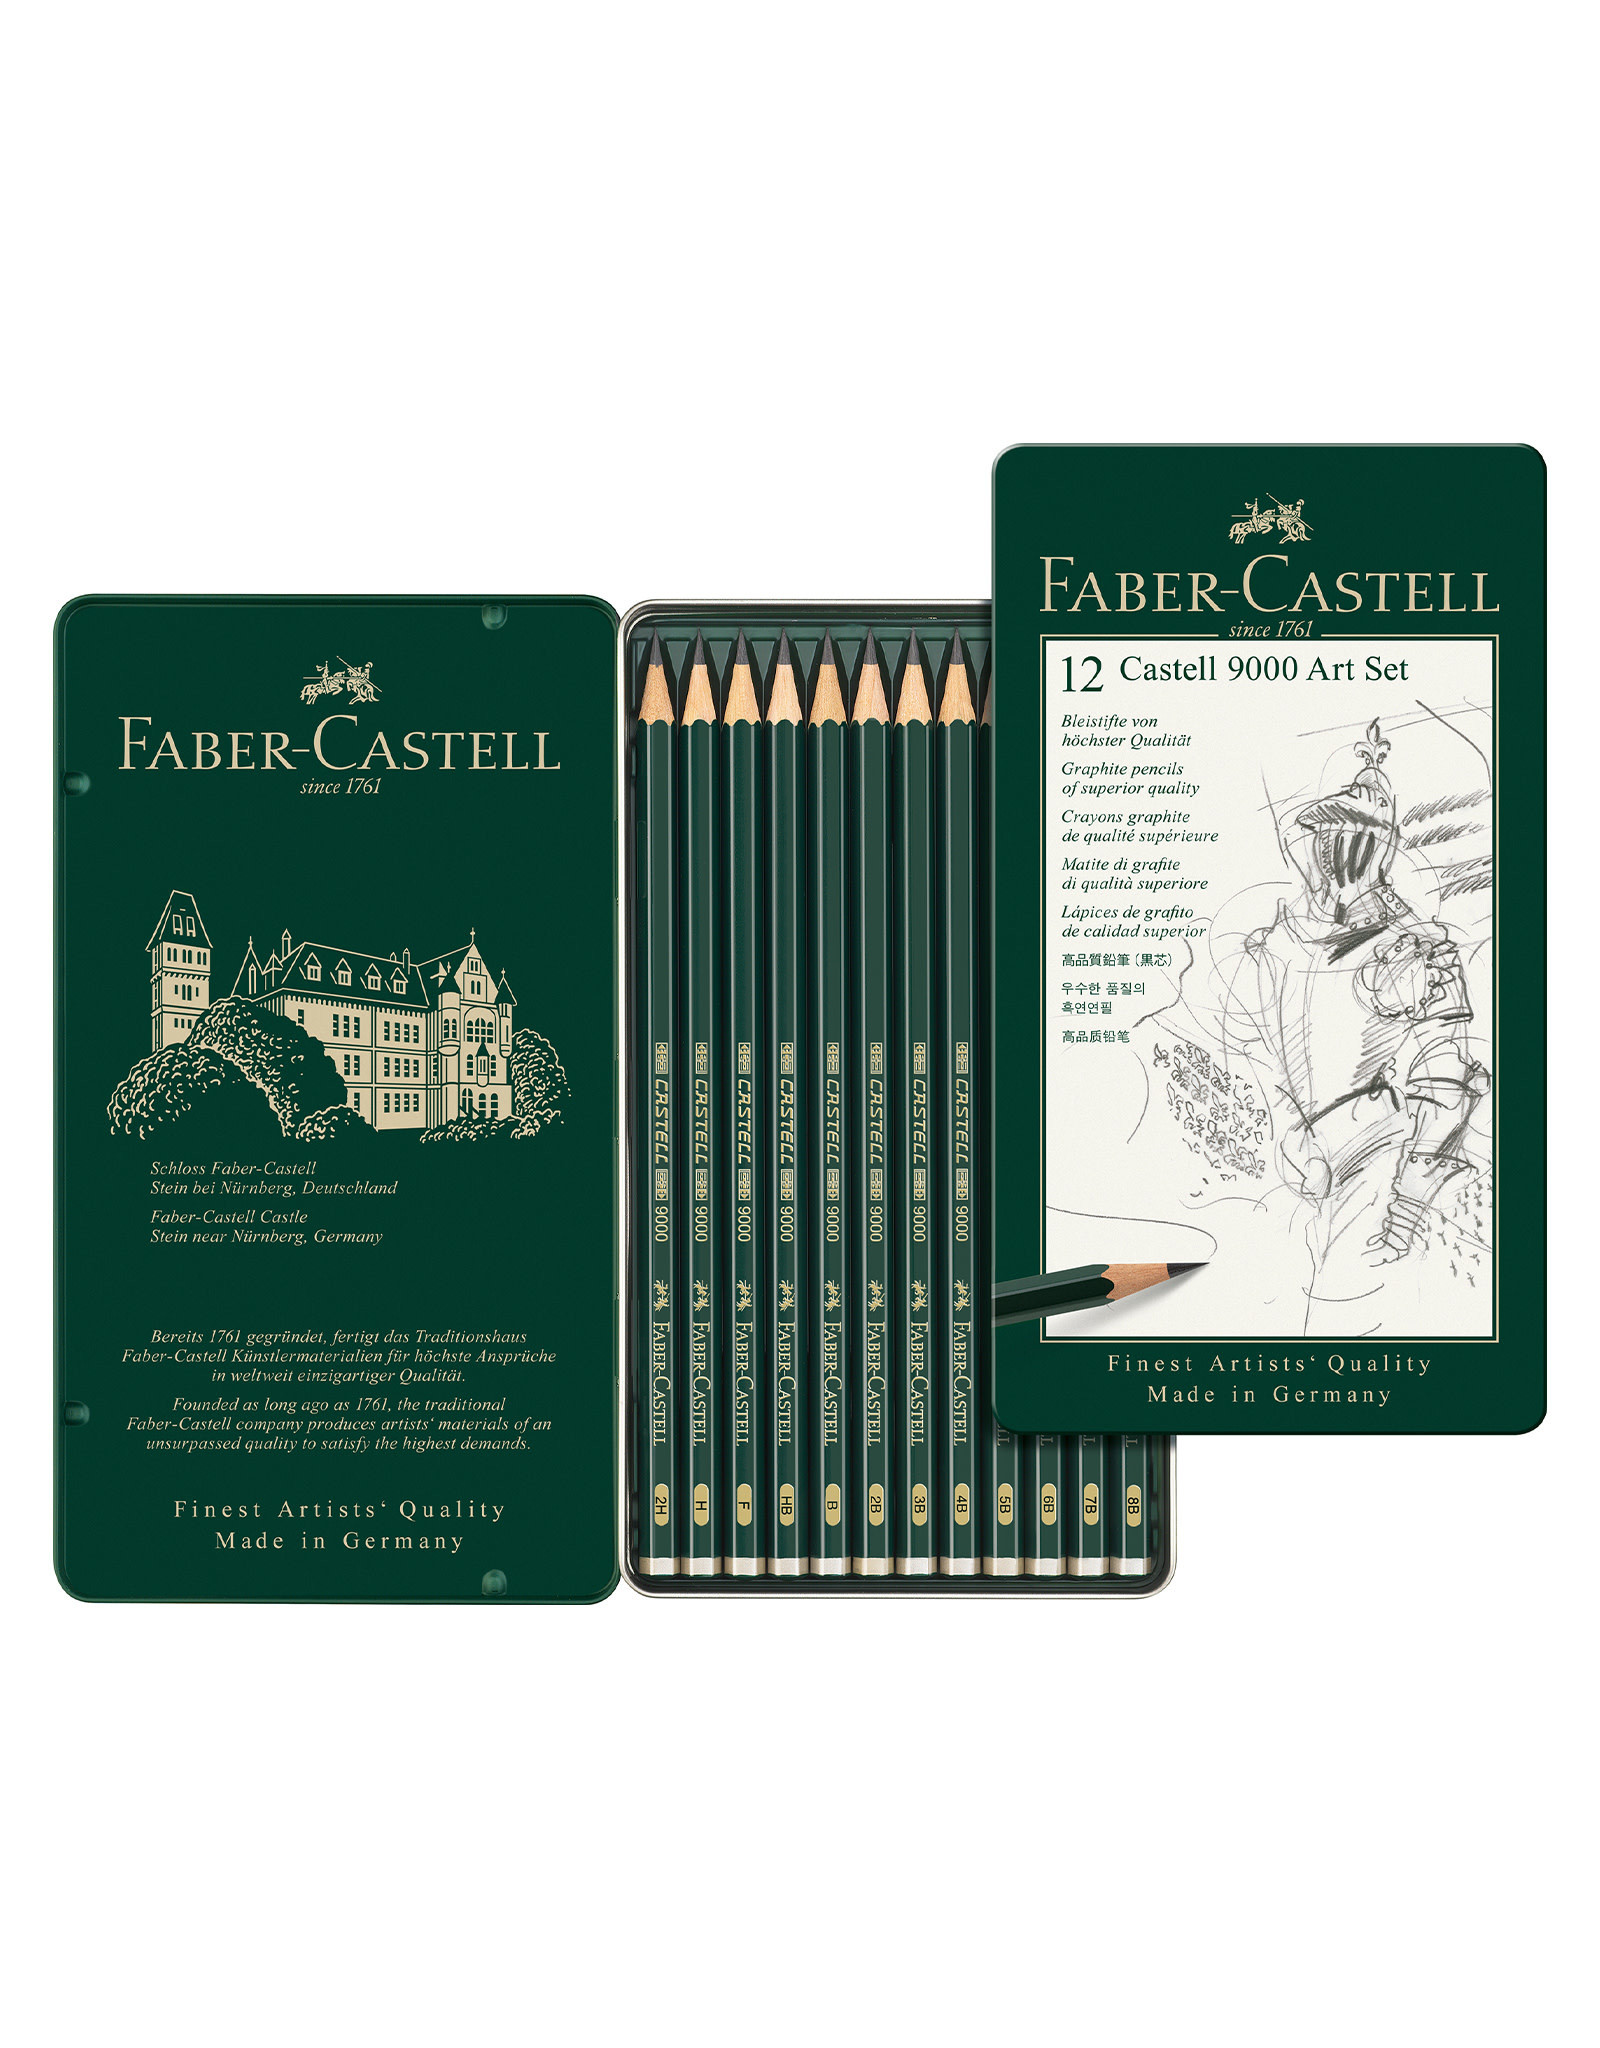 FABER-CASTELL Castell® 9000 Art Set of 12